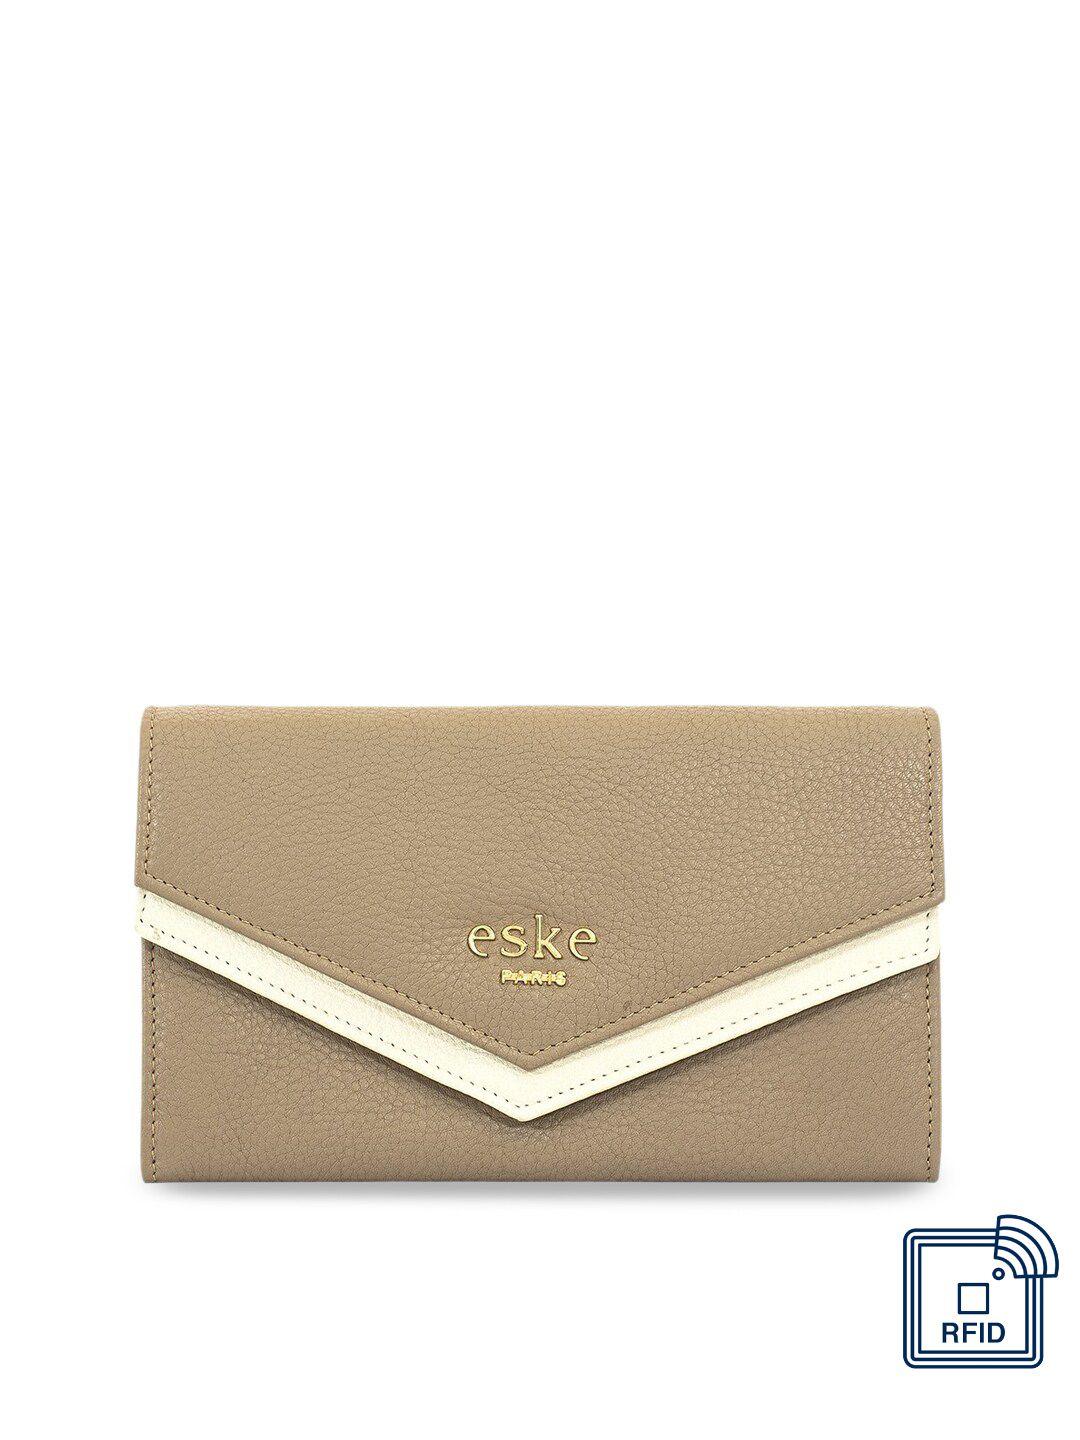 eske women brown solid envelope leather wallet